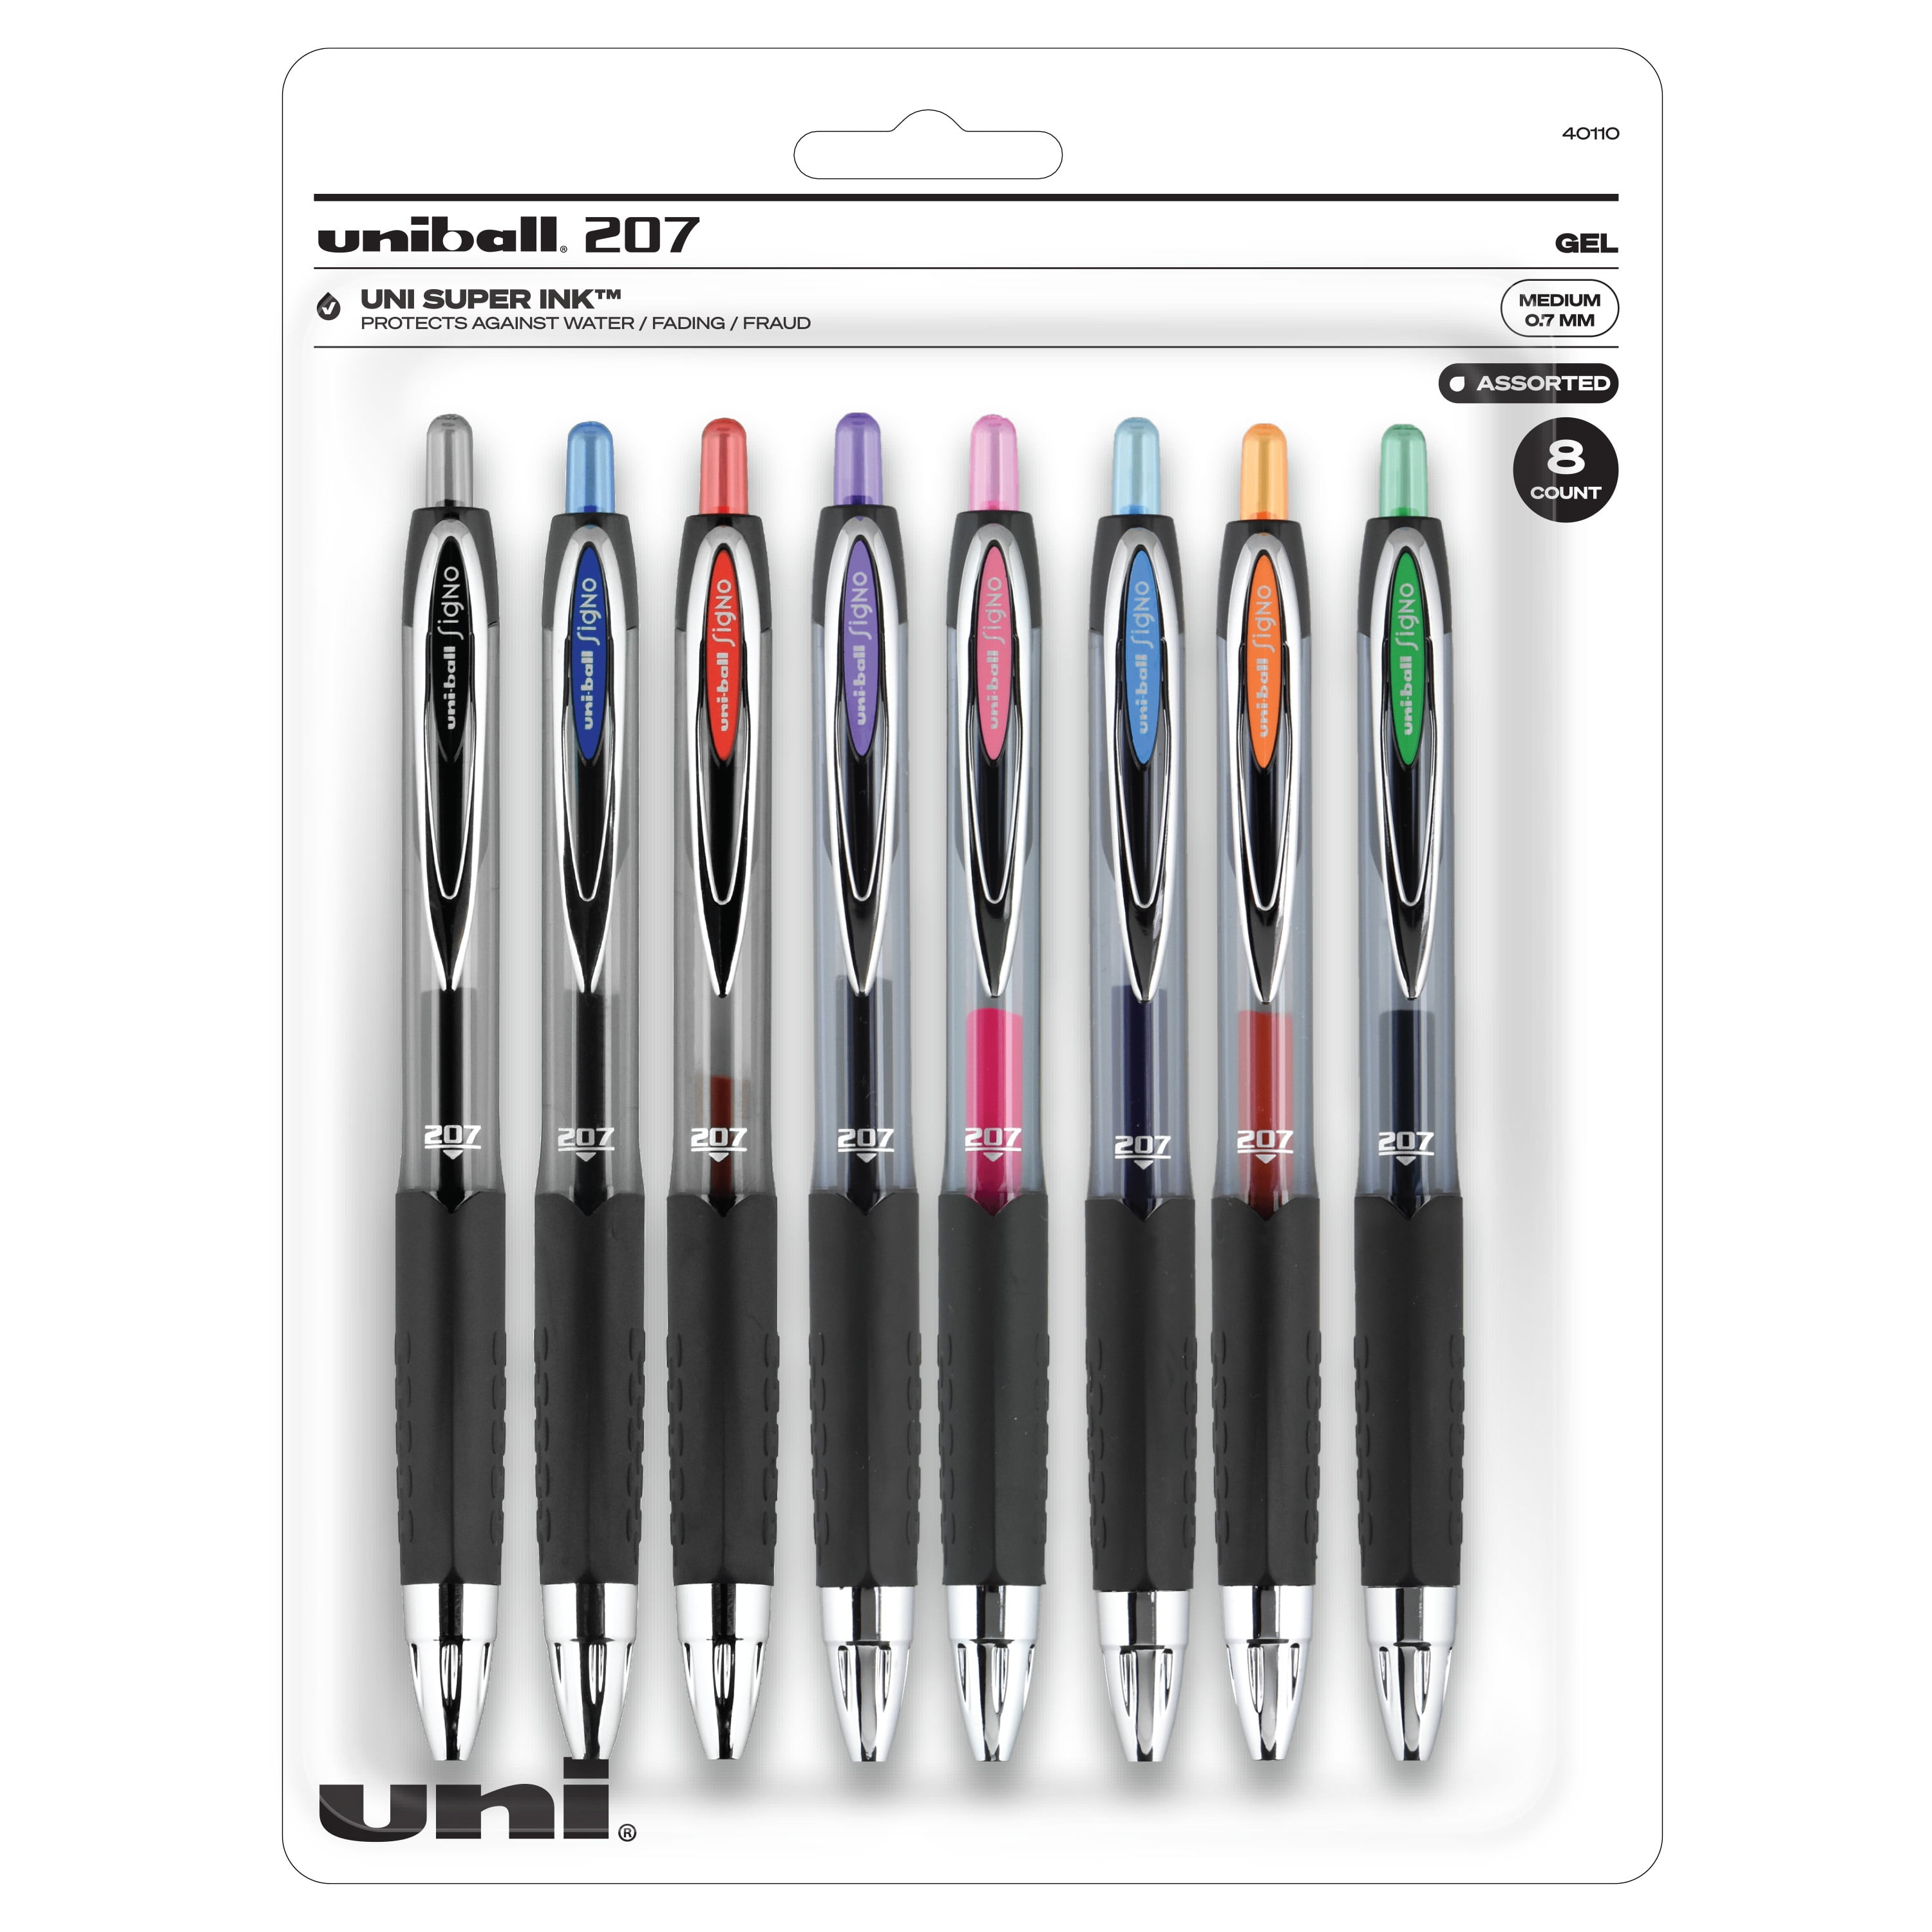 Uniball 207 Retractable Gel Pens, Medium Point (0.7mm), Assorted Ink, 8  Count 